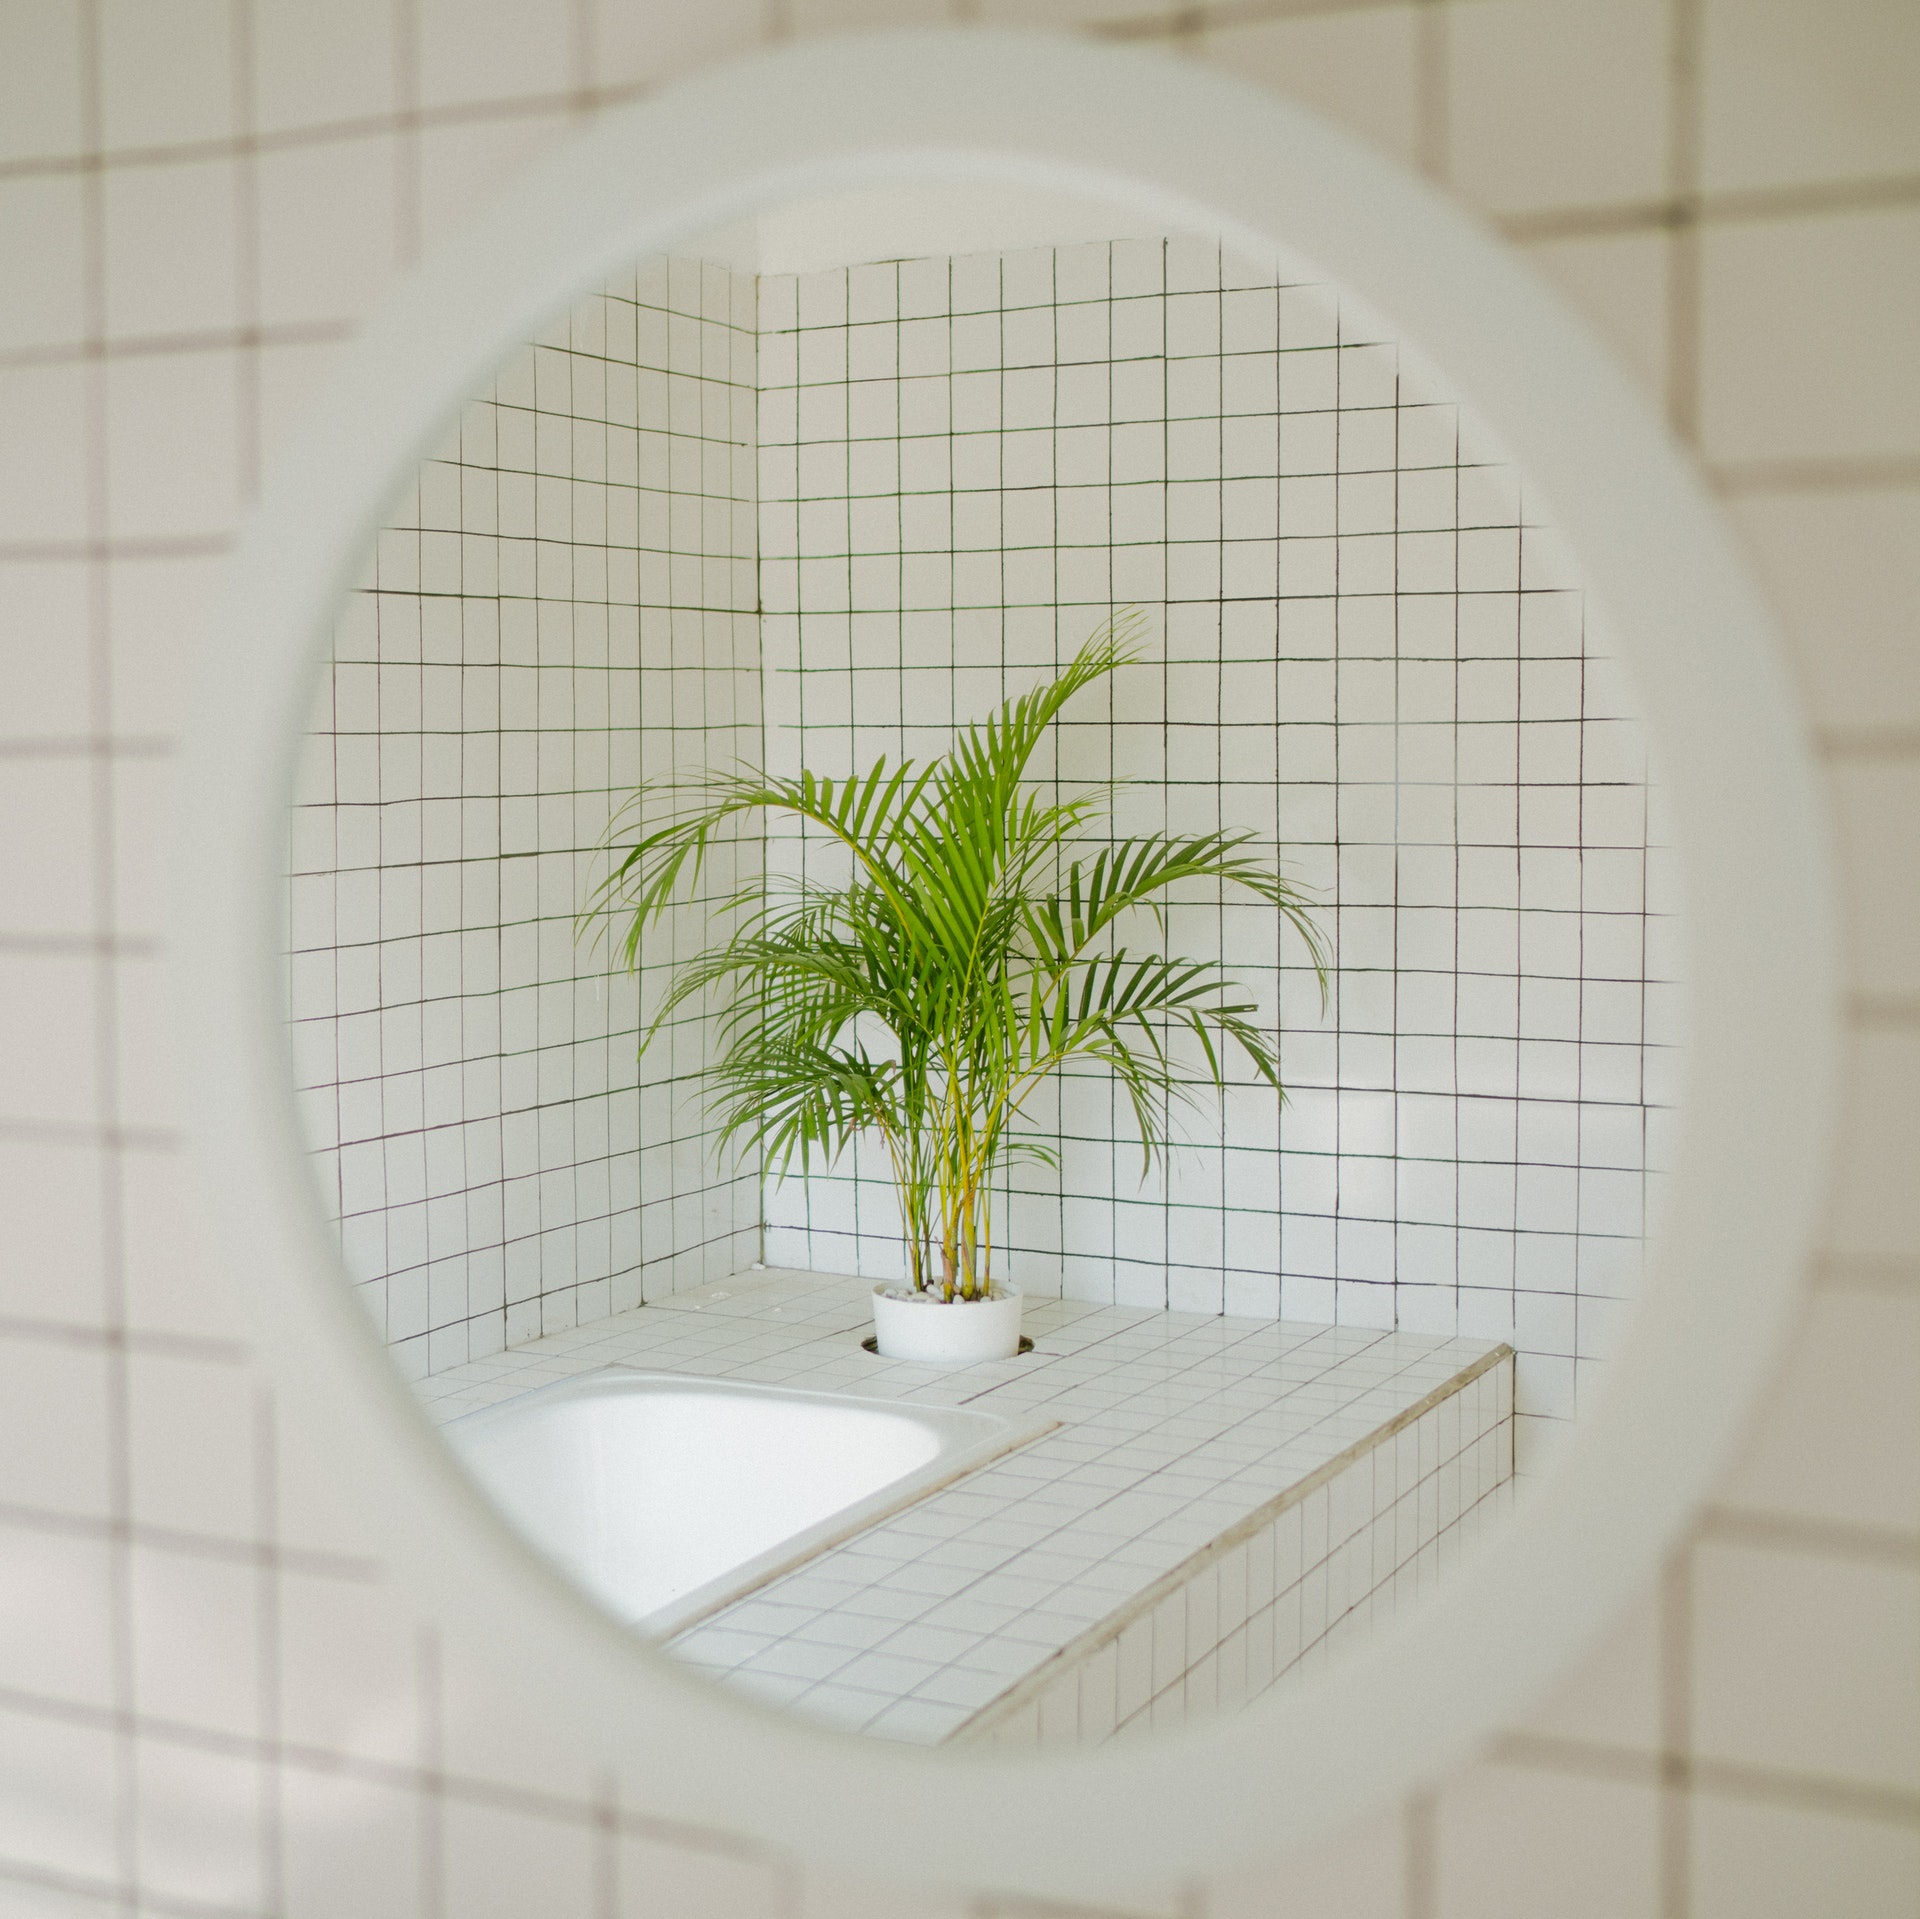 Bathroom Design Ideas for Small Space